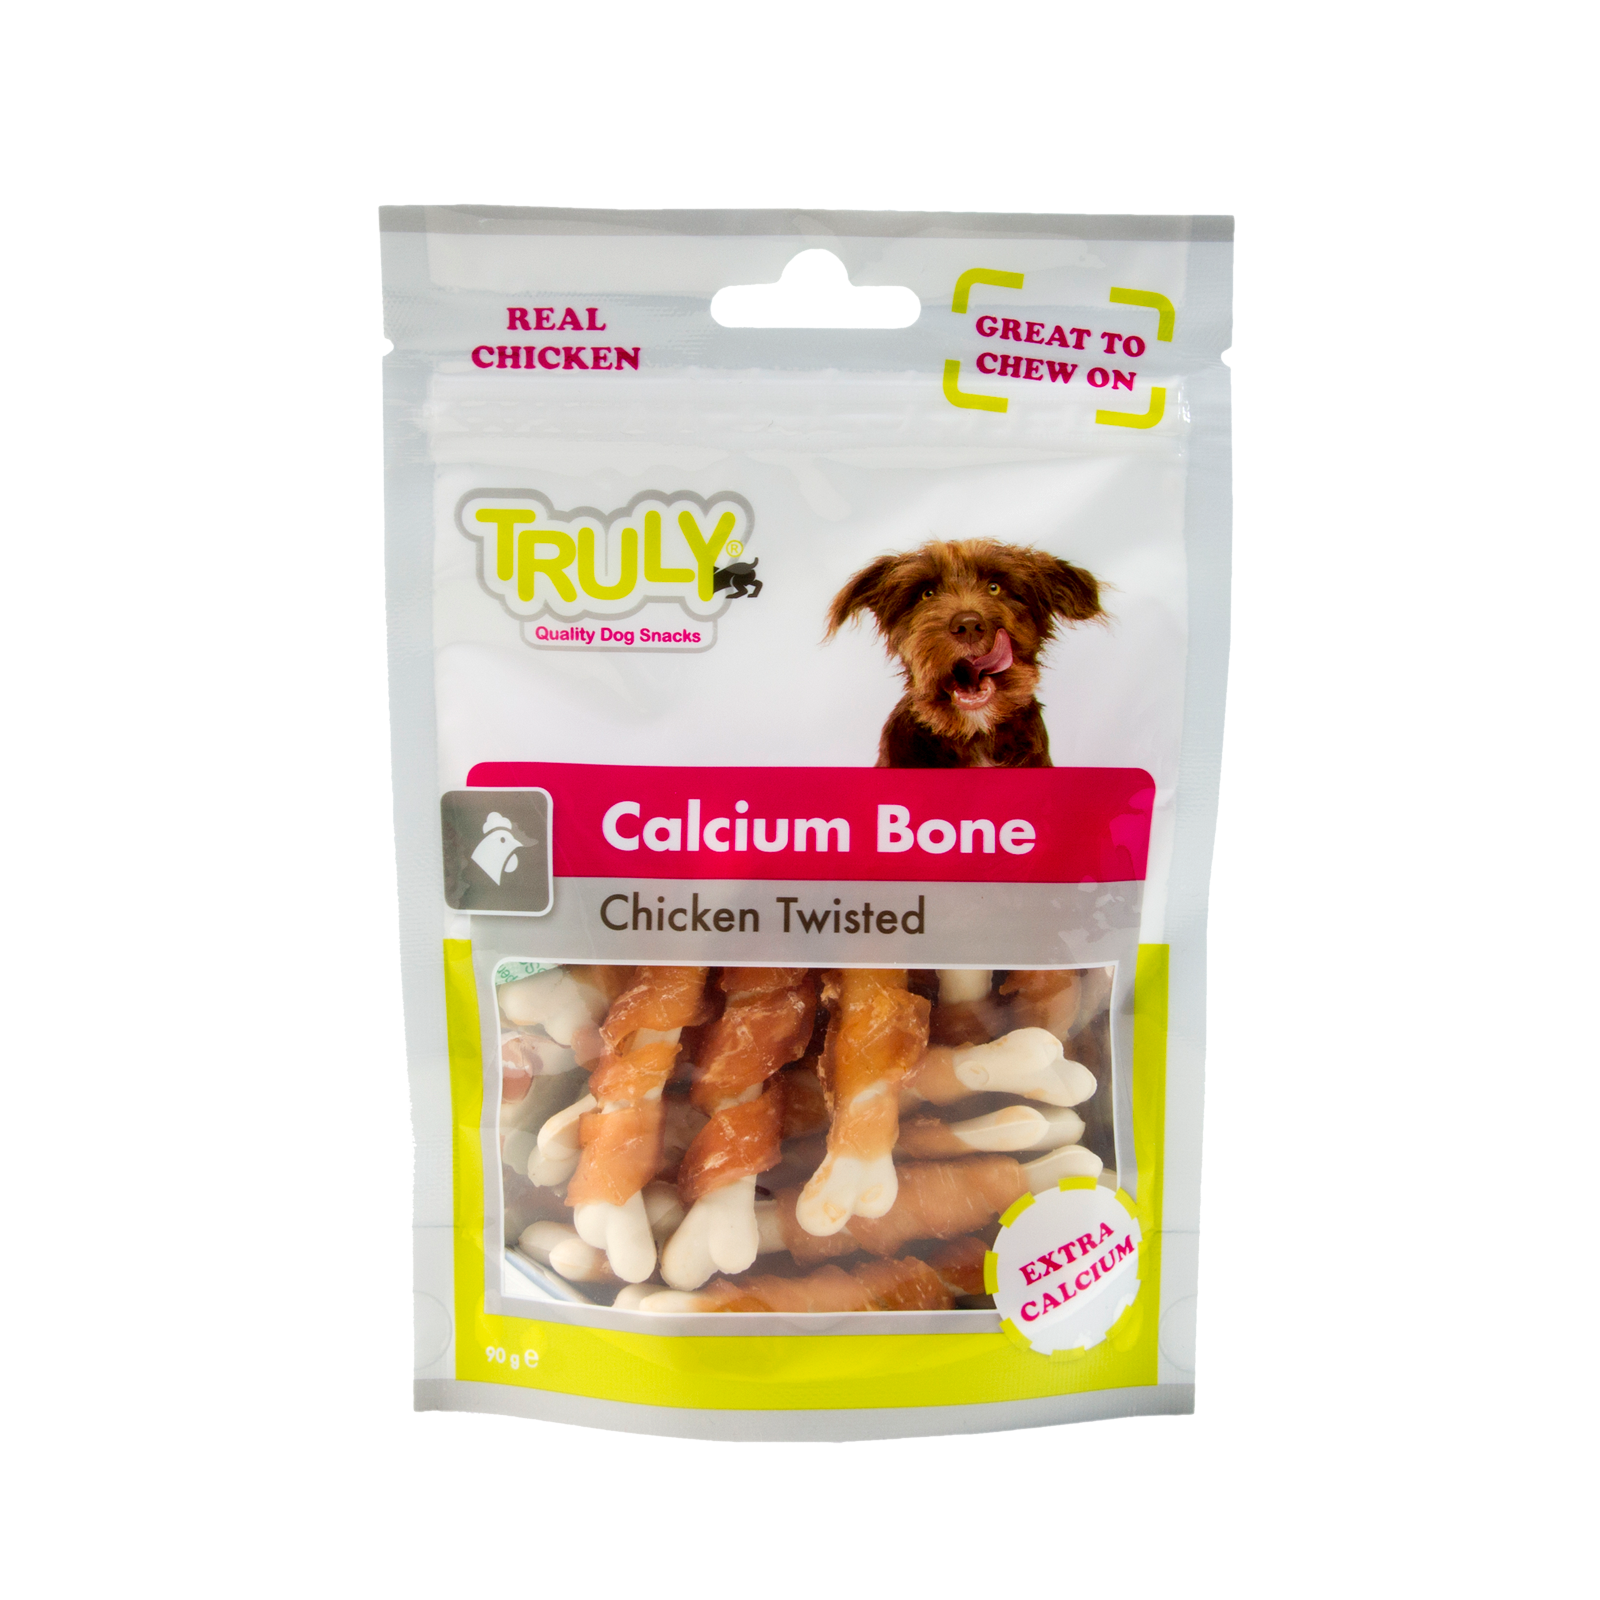 Hunde Snack Calcium Bones mit Chicken Filet umwickelt